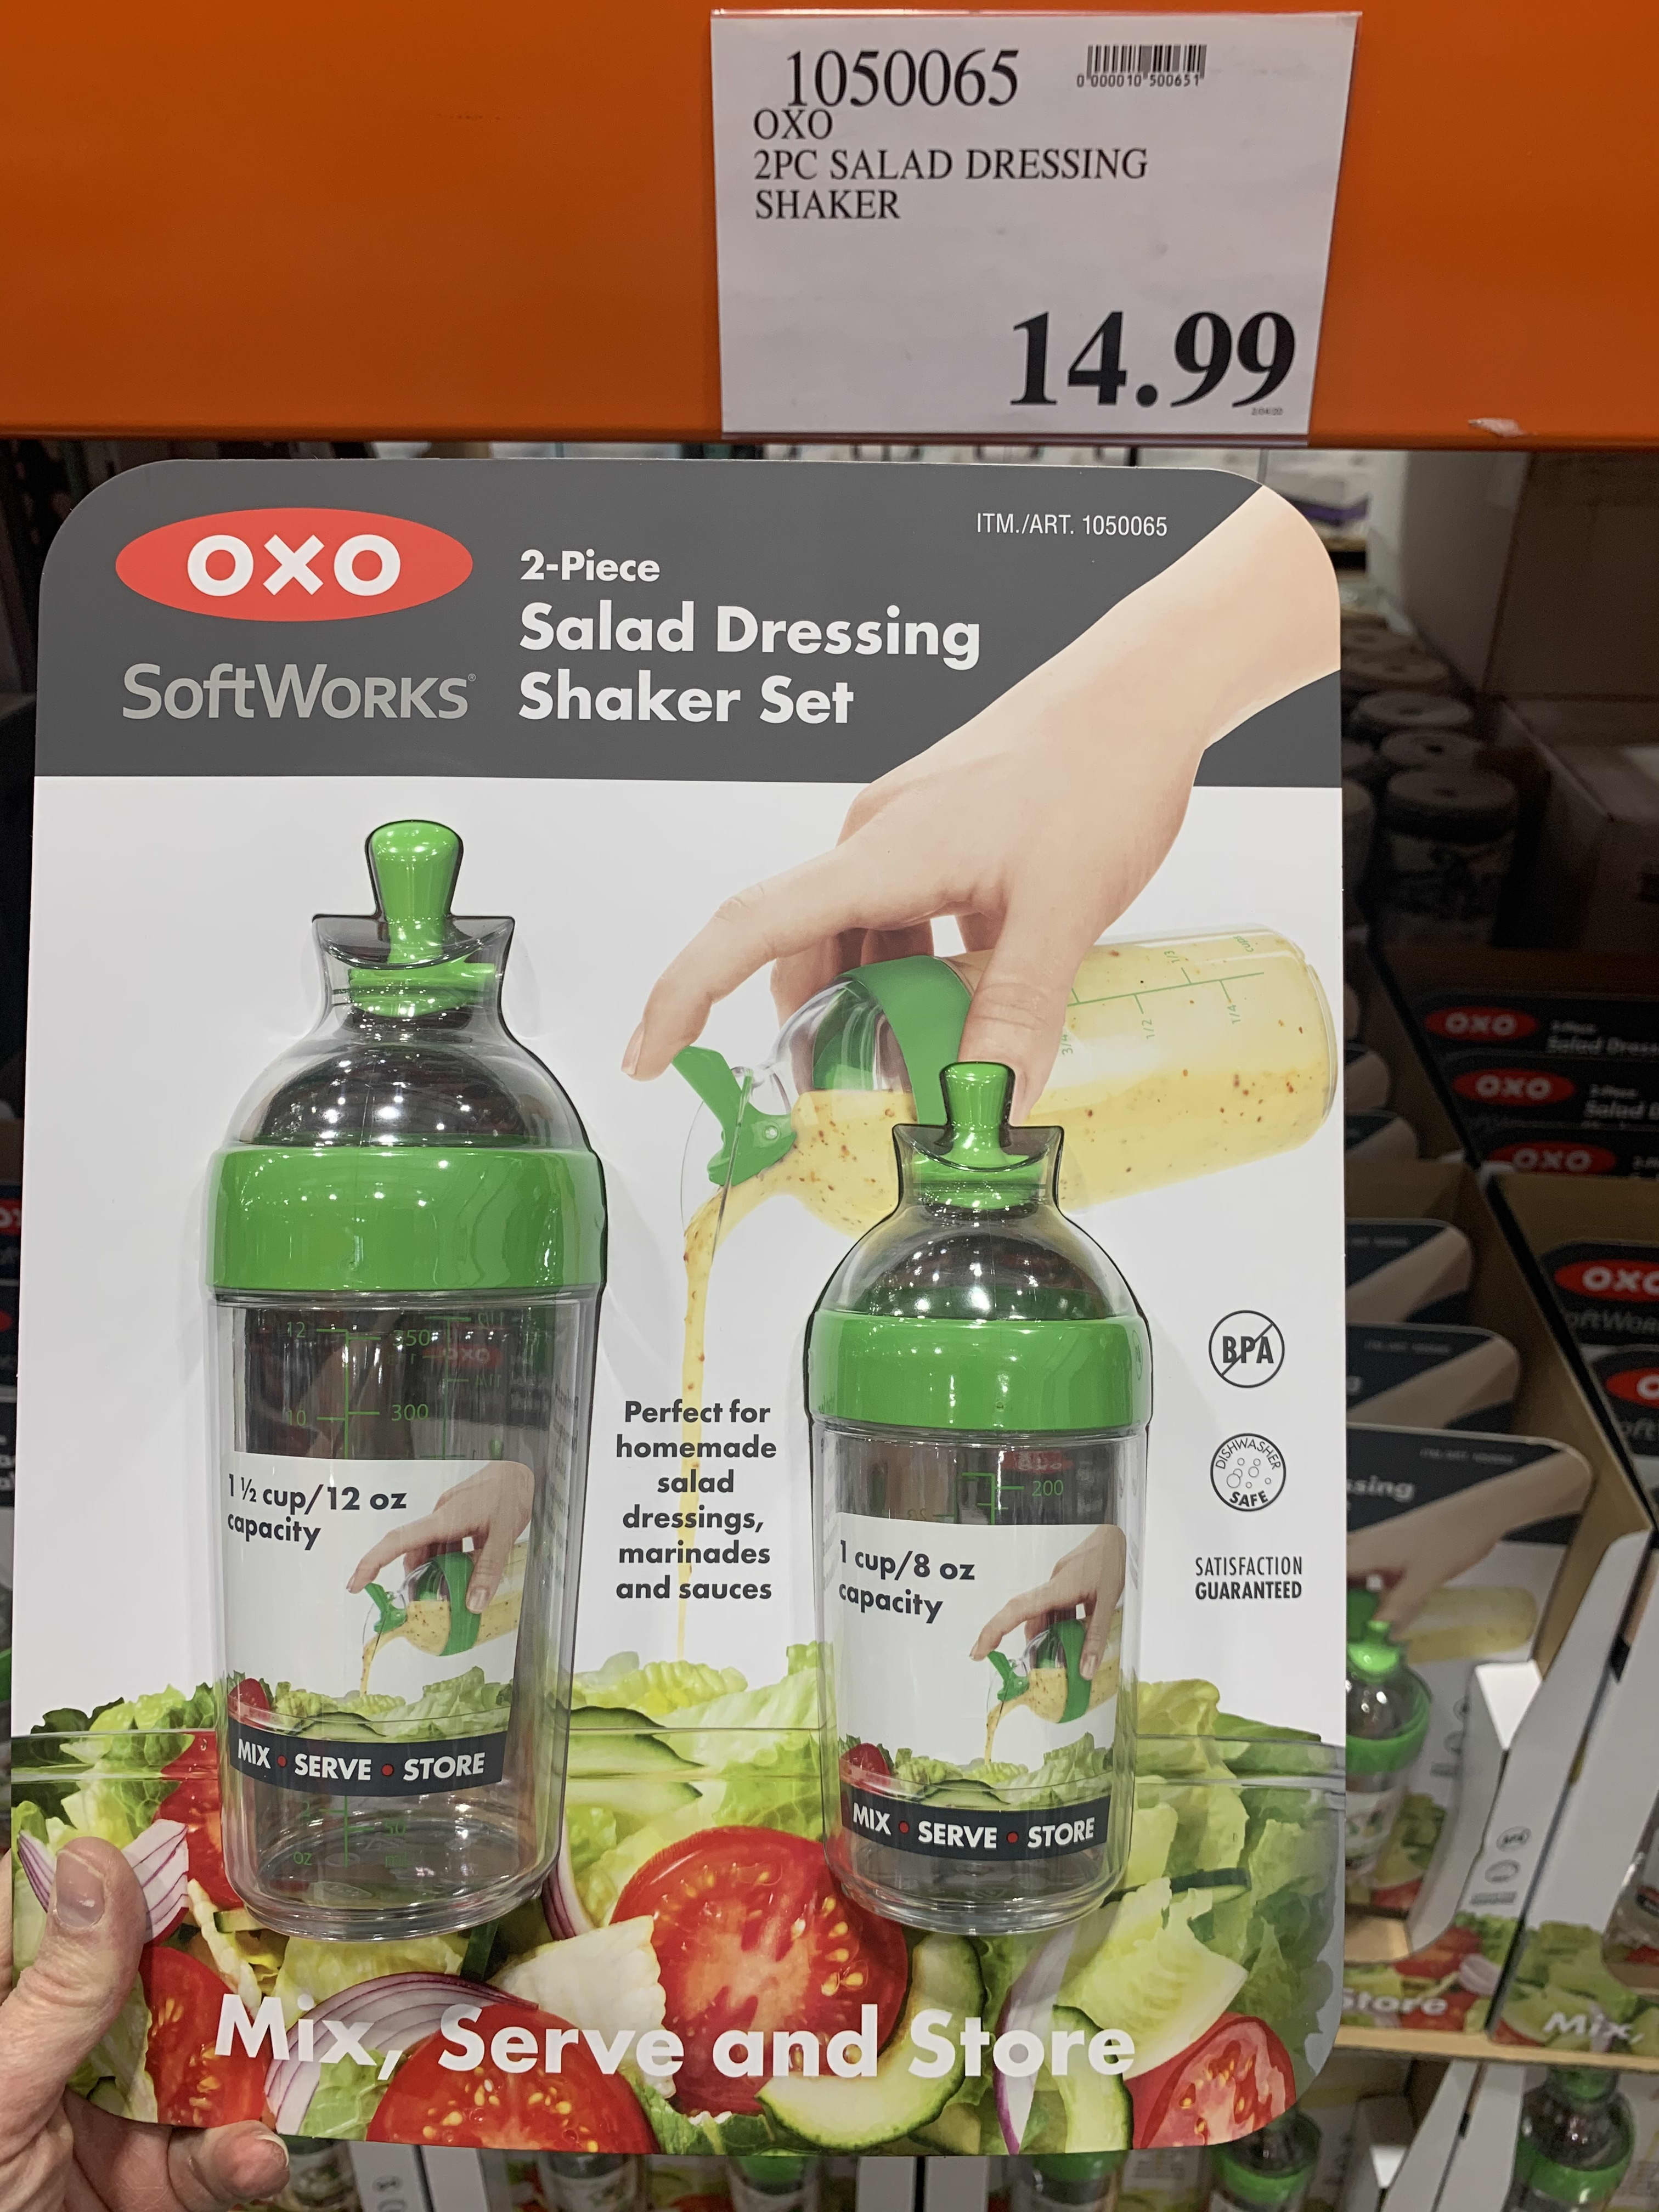 Costco_doesitagain on Instagram: “Salad dressing shaker set $14.99